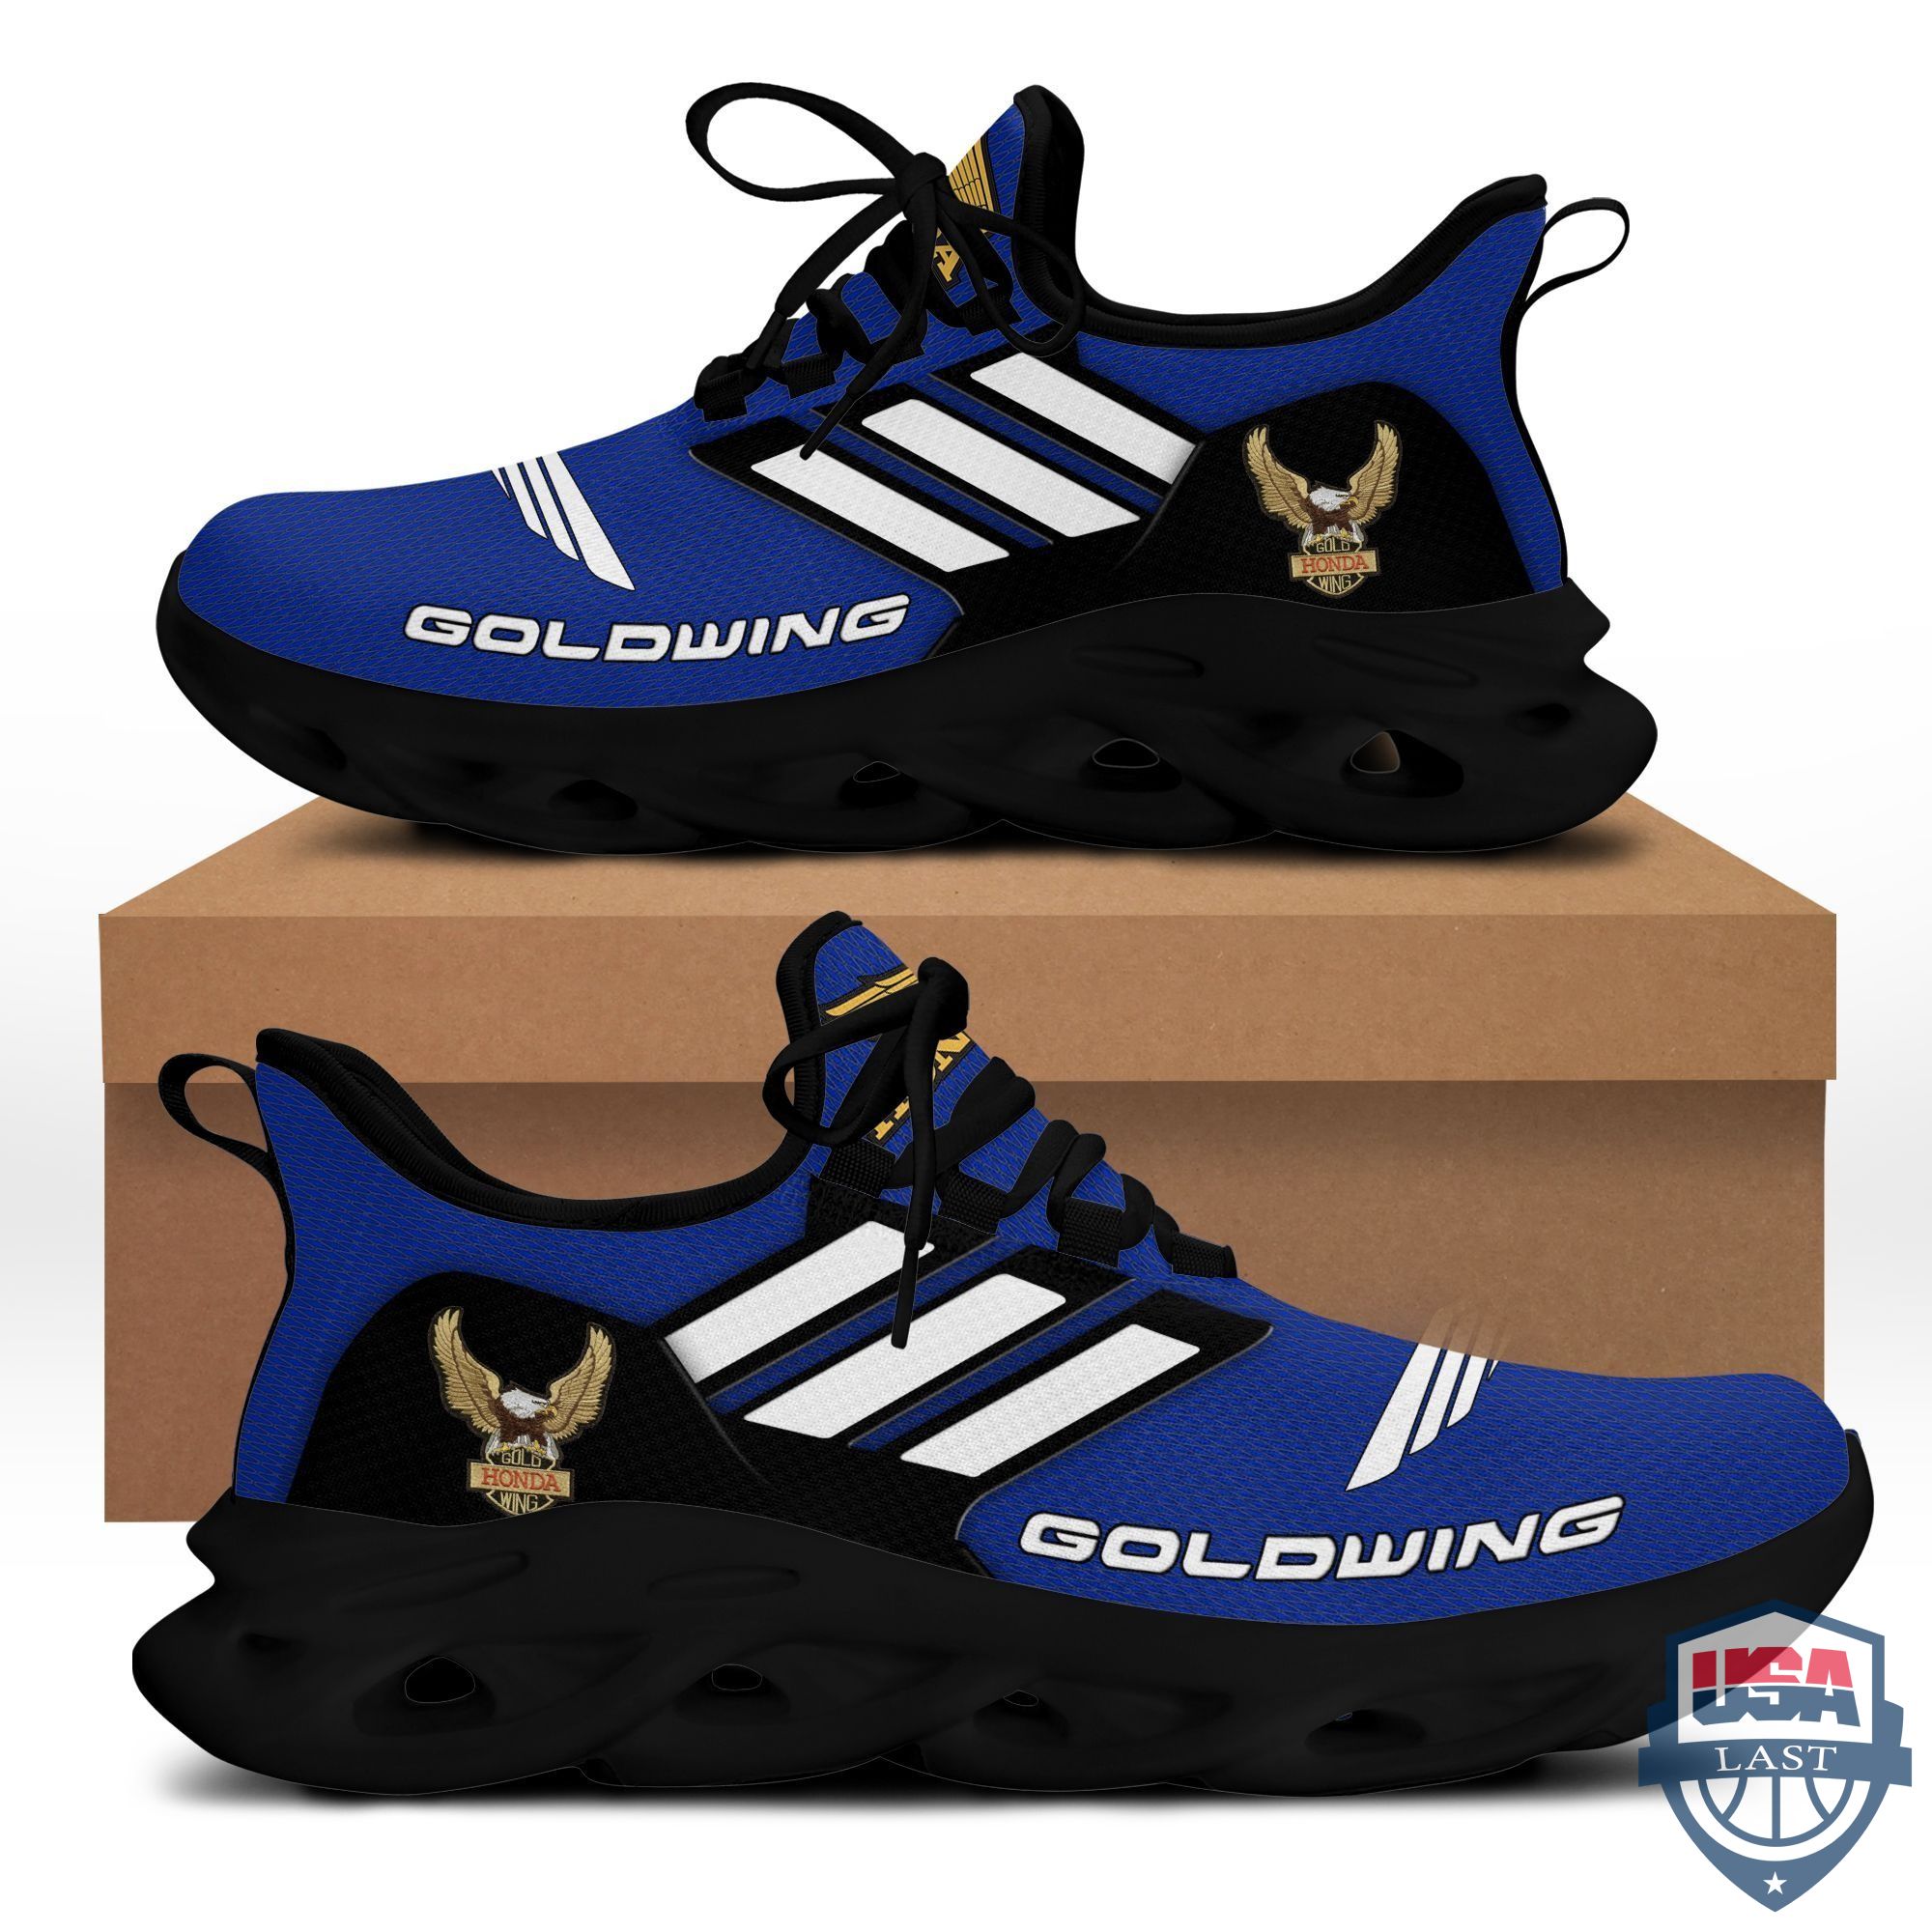 Honda Gold Wing Max Soul Sneaker Shoes Blue Version